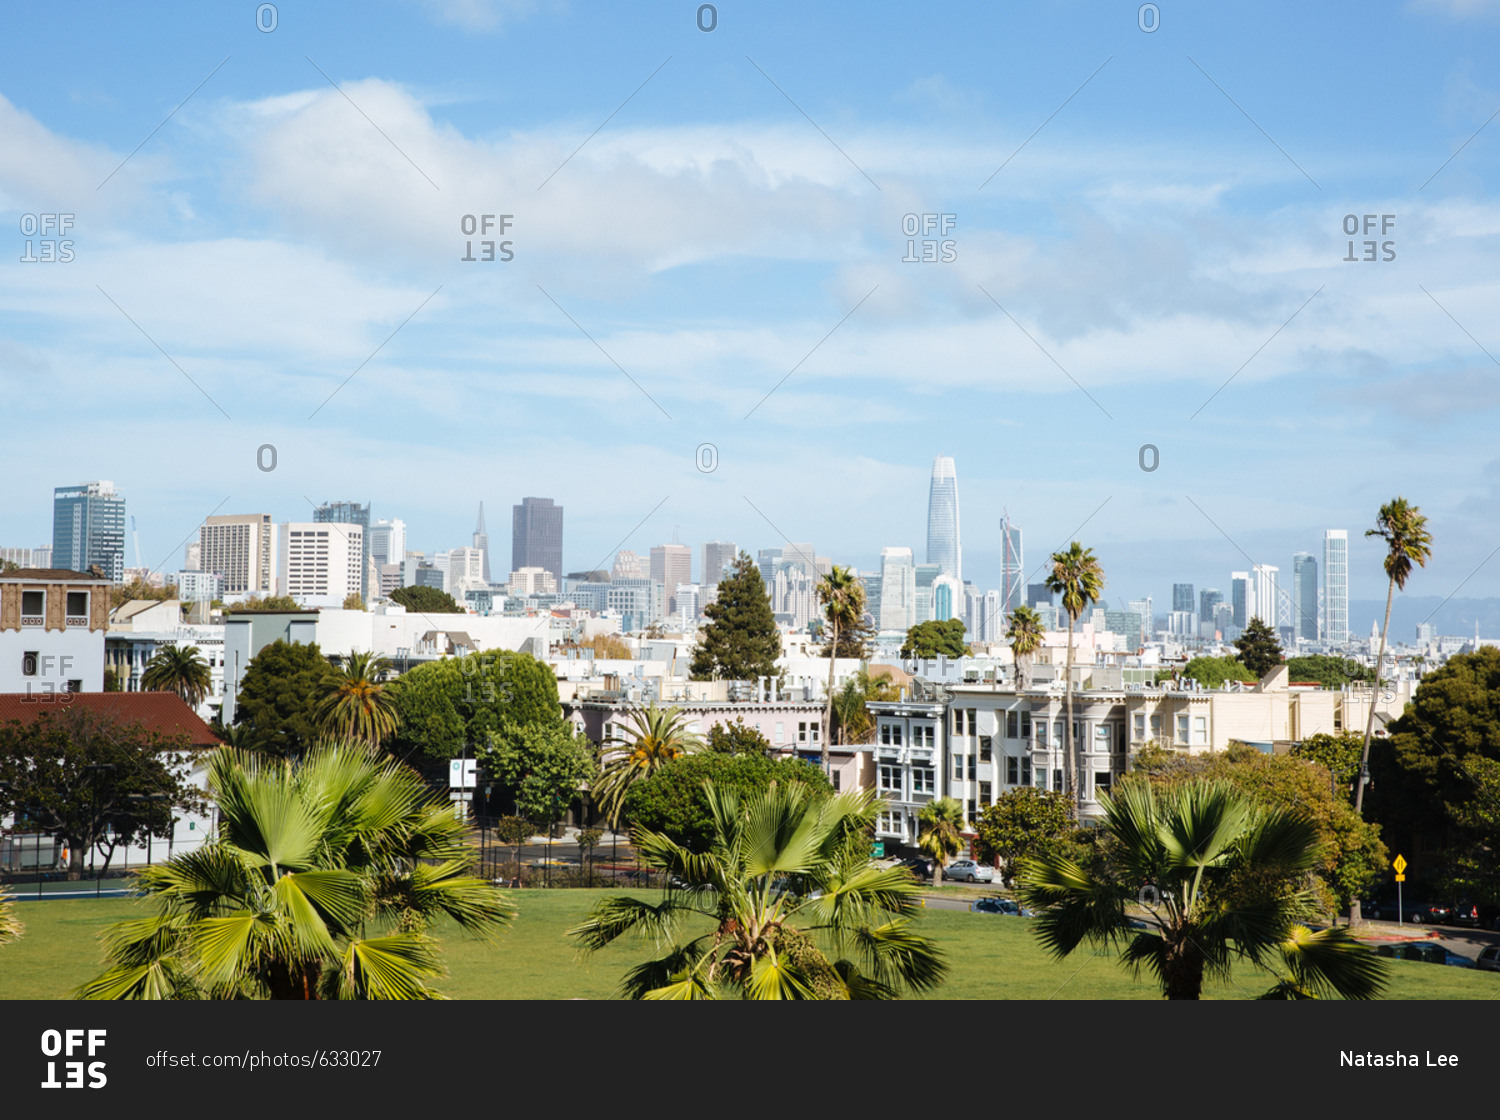 Mission District, San Francisco